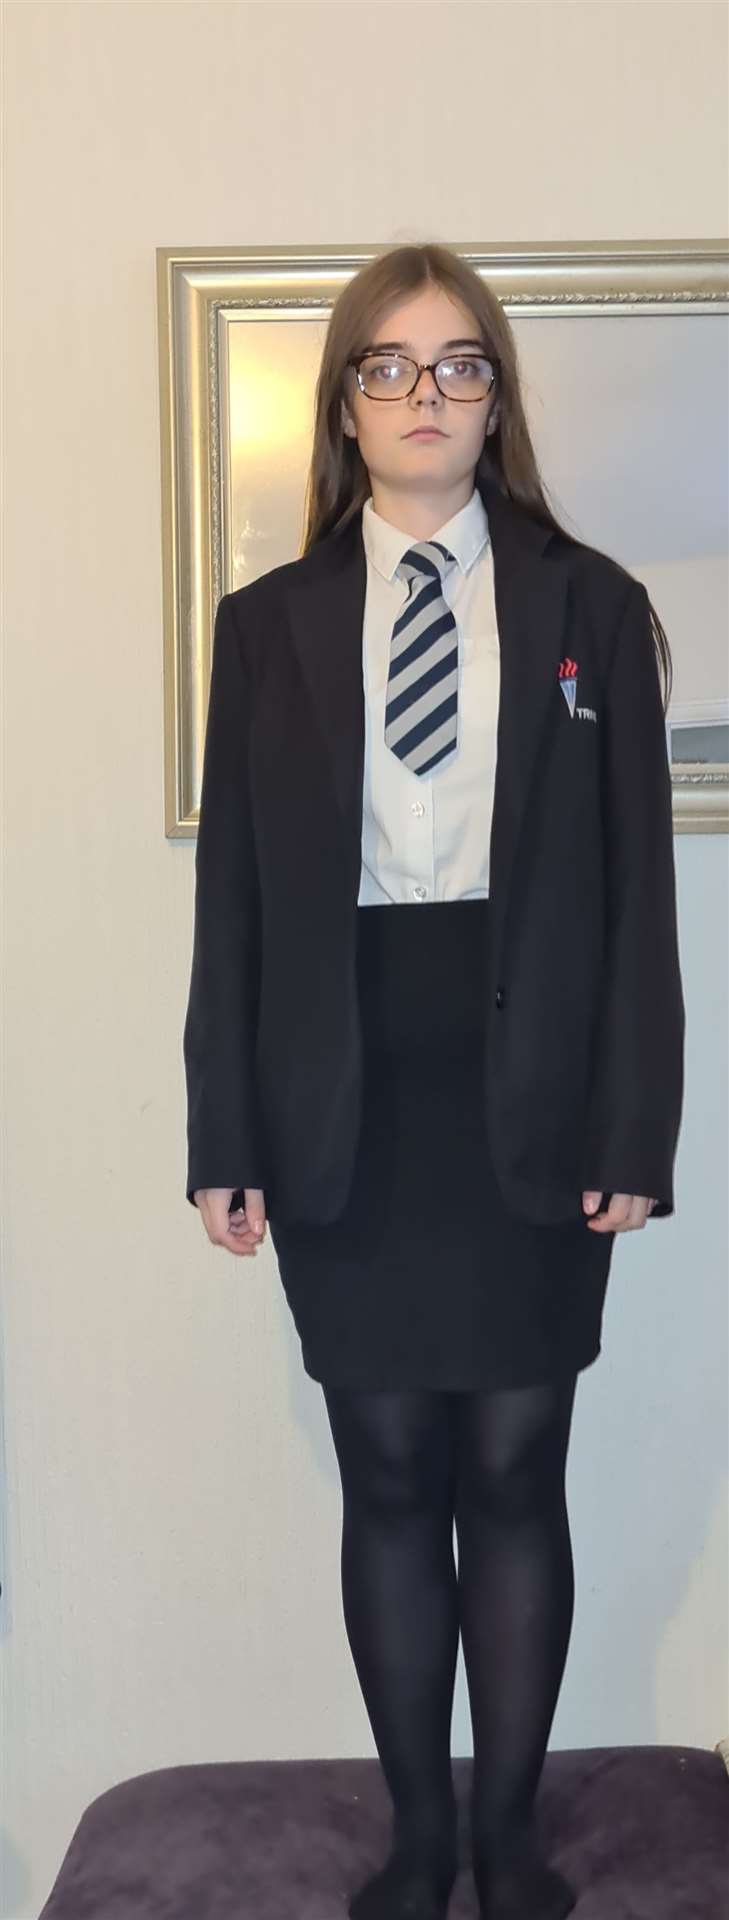 Katelin in the approved uniform skirt